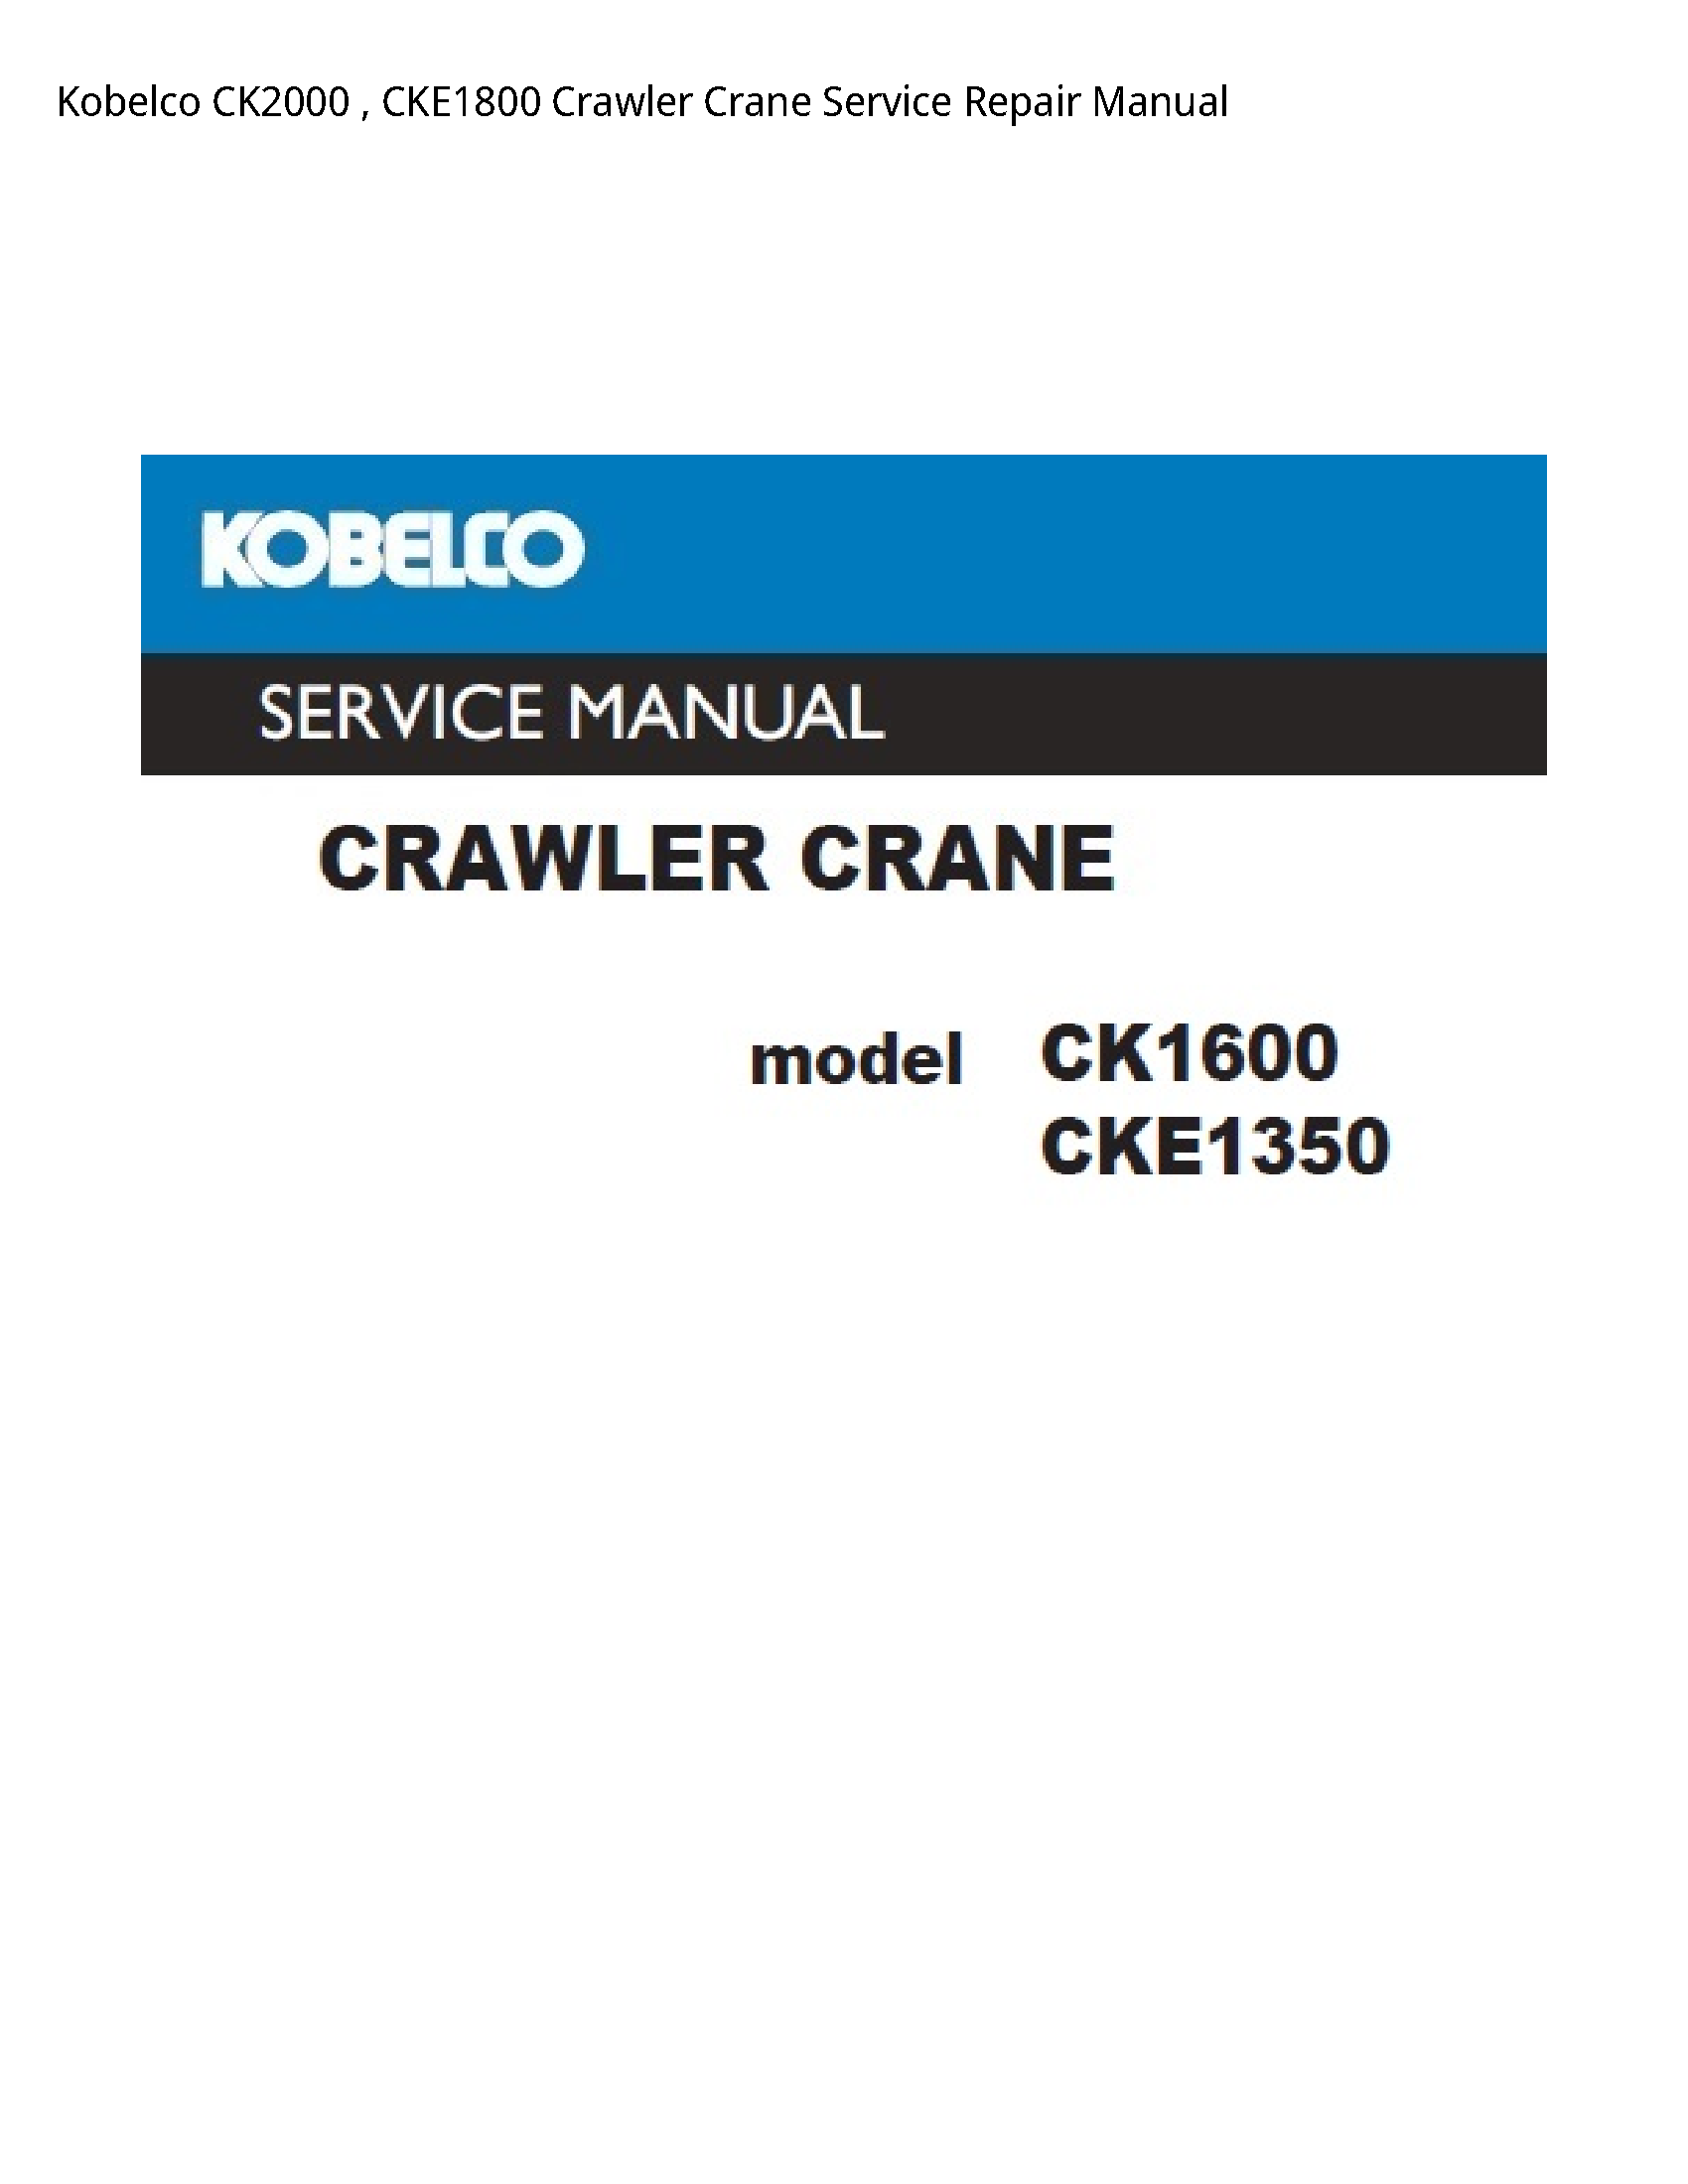 Kobelco CK2000 Crawler Crane manual